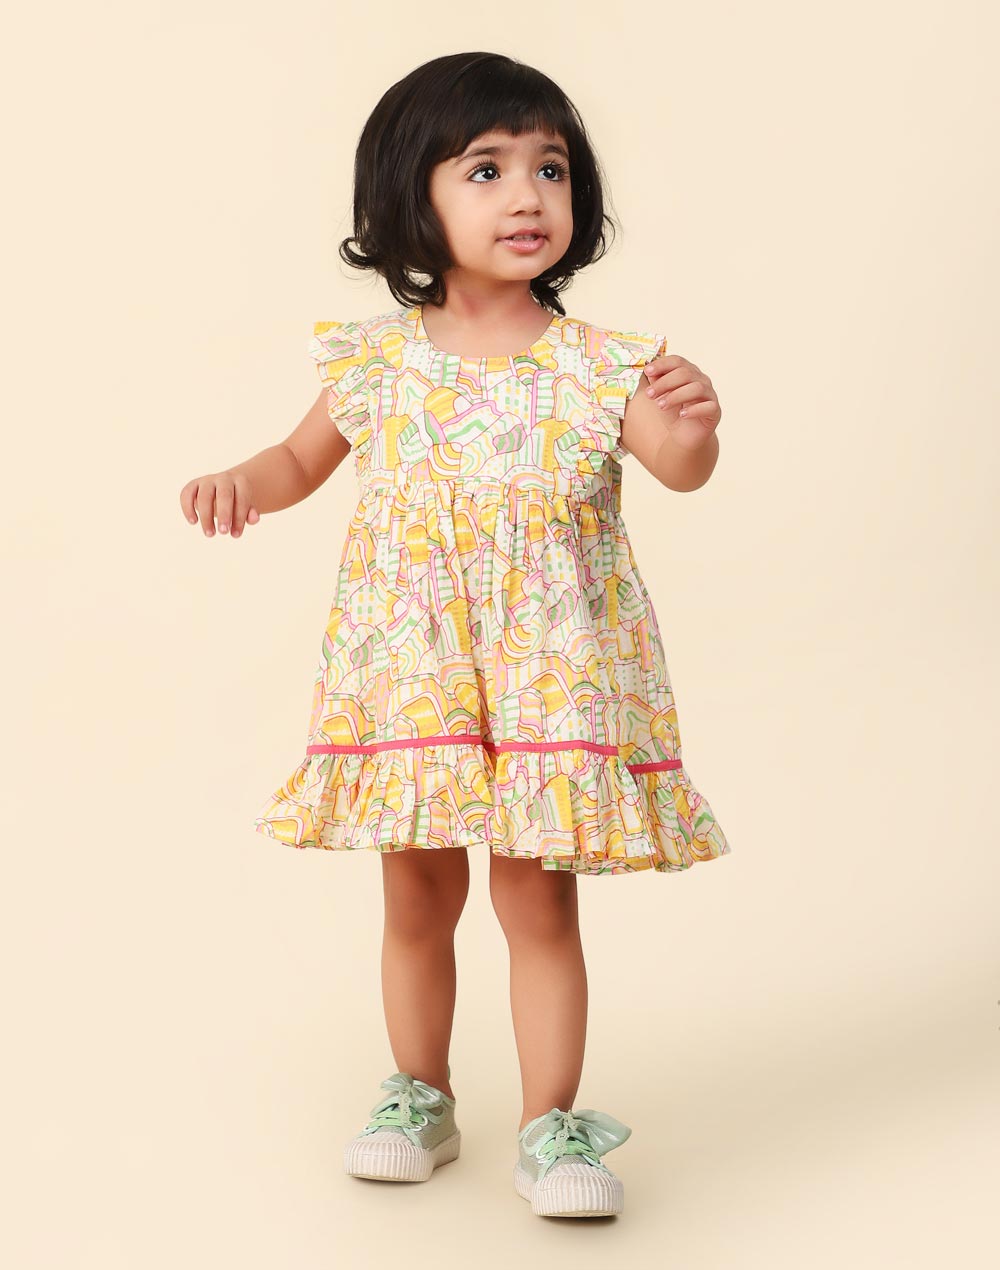 Kupretty Newborn Infant Baby Girl Summer Clothes India